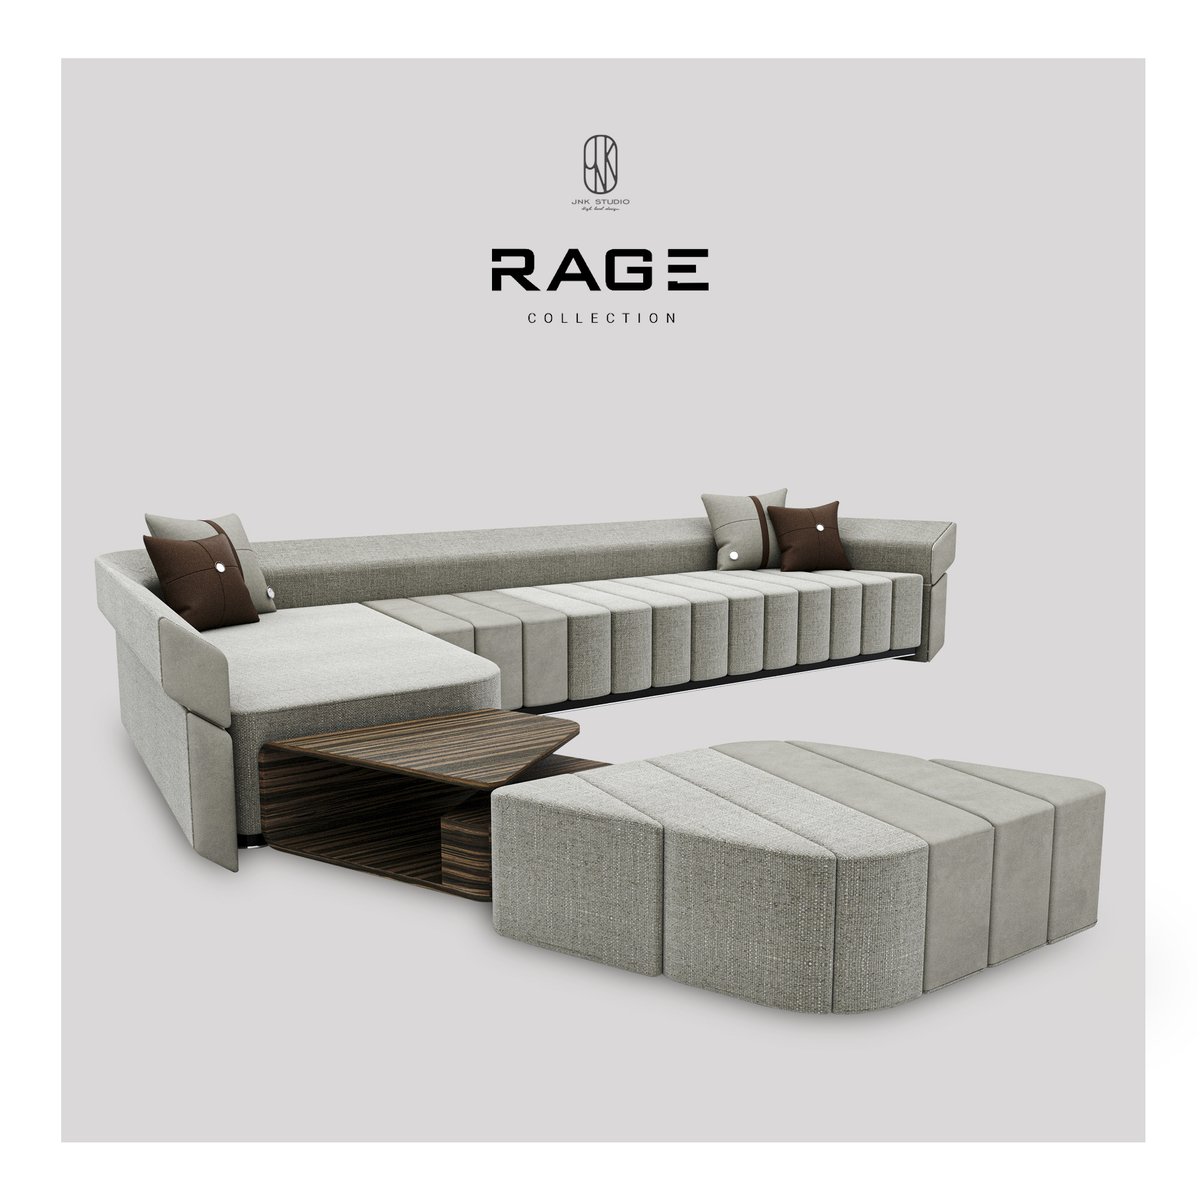 Rage Collection Corner Sofa..

#details #jnkprojectofficial #furnituredesign #furniture #luxuryfurniture #luxury #luxurylifestyle #mobilya #furniture #modernmobilya #interiordesign #design #jnkproject #luxury #luxurydesign #luxuryfurniture